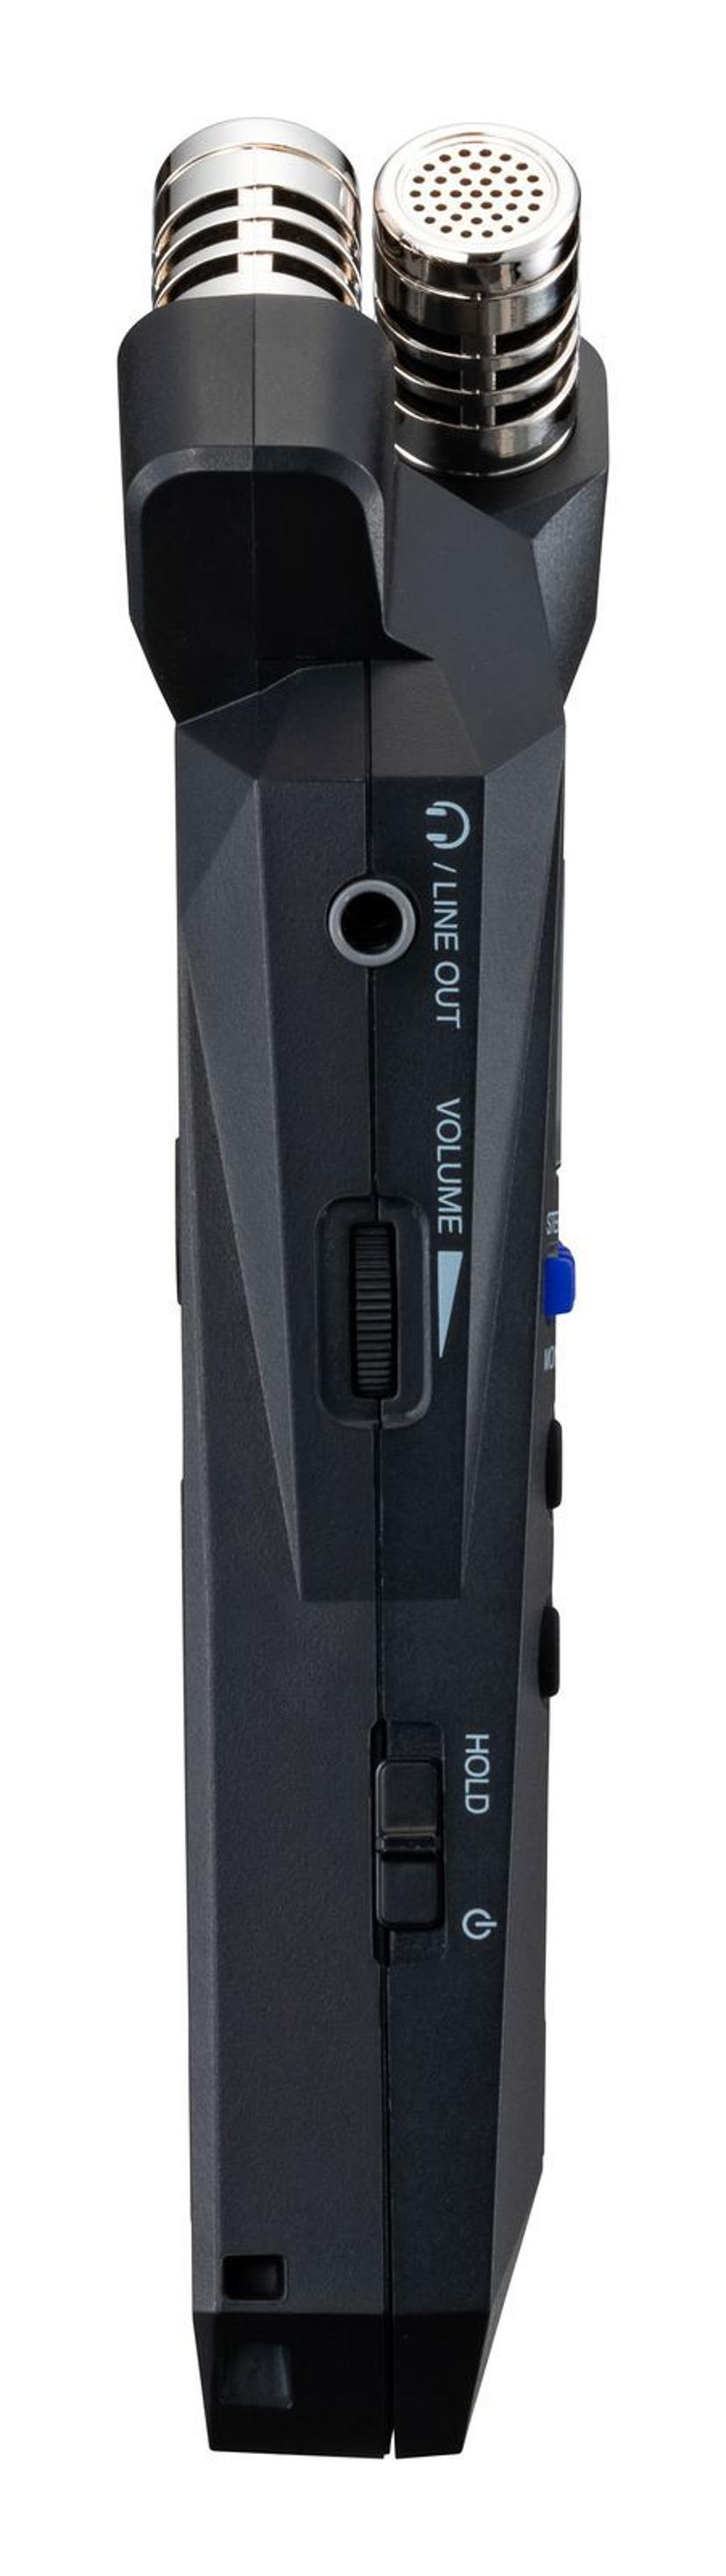 Zoom H1essential Handy Recorder Musta